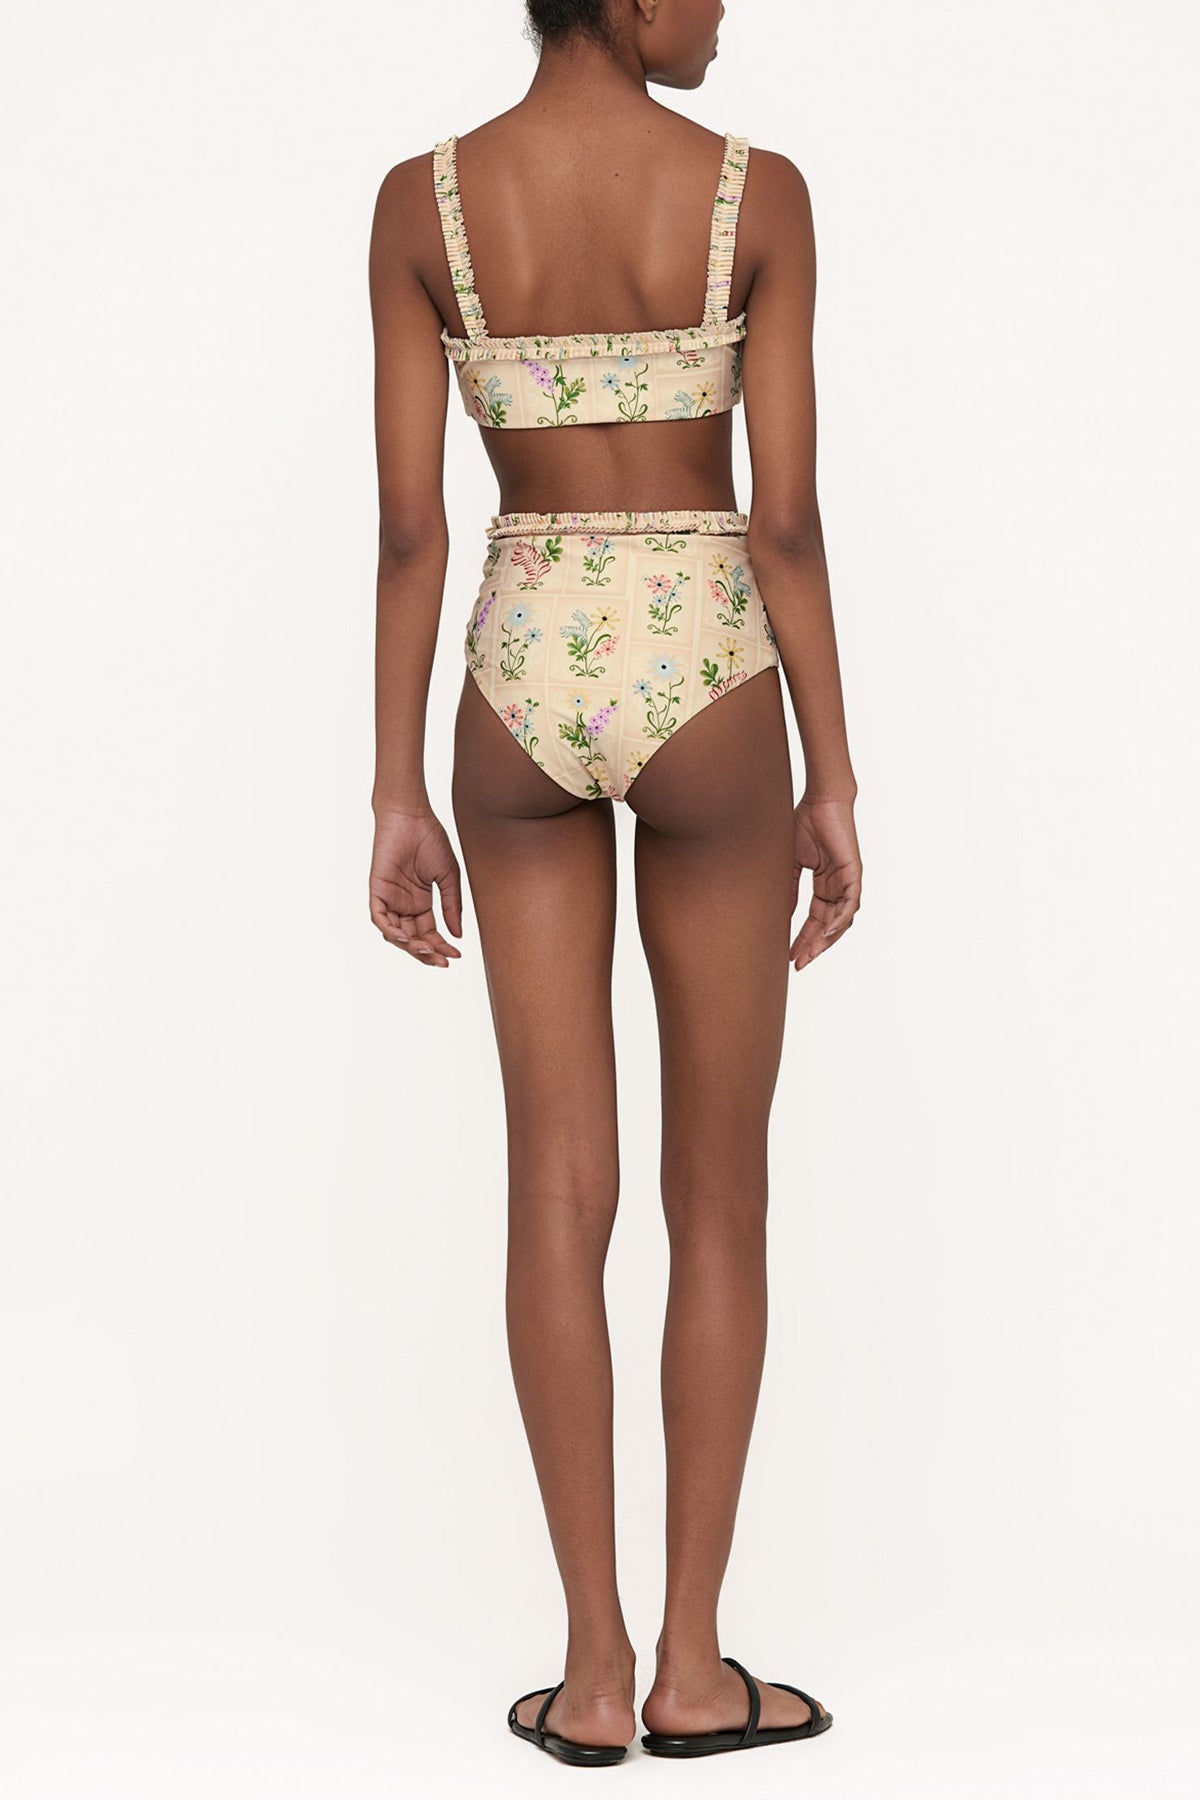 Olmo Pradera Bikini Top in Neutral - shop-olivia.com